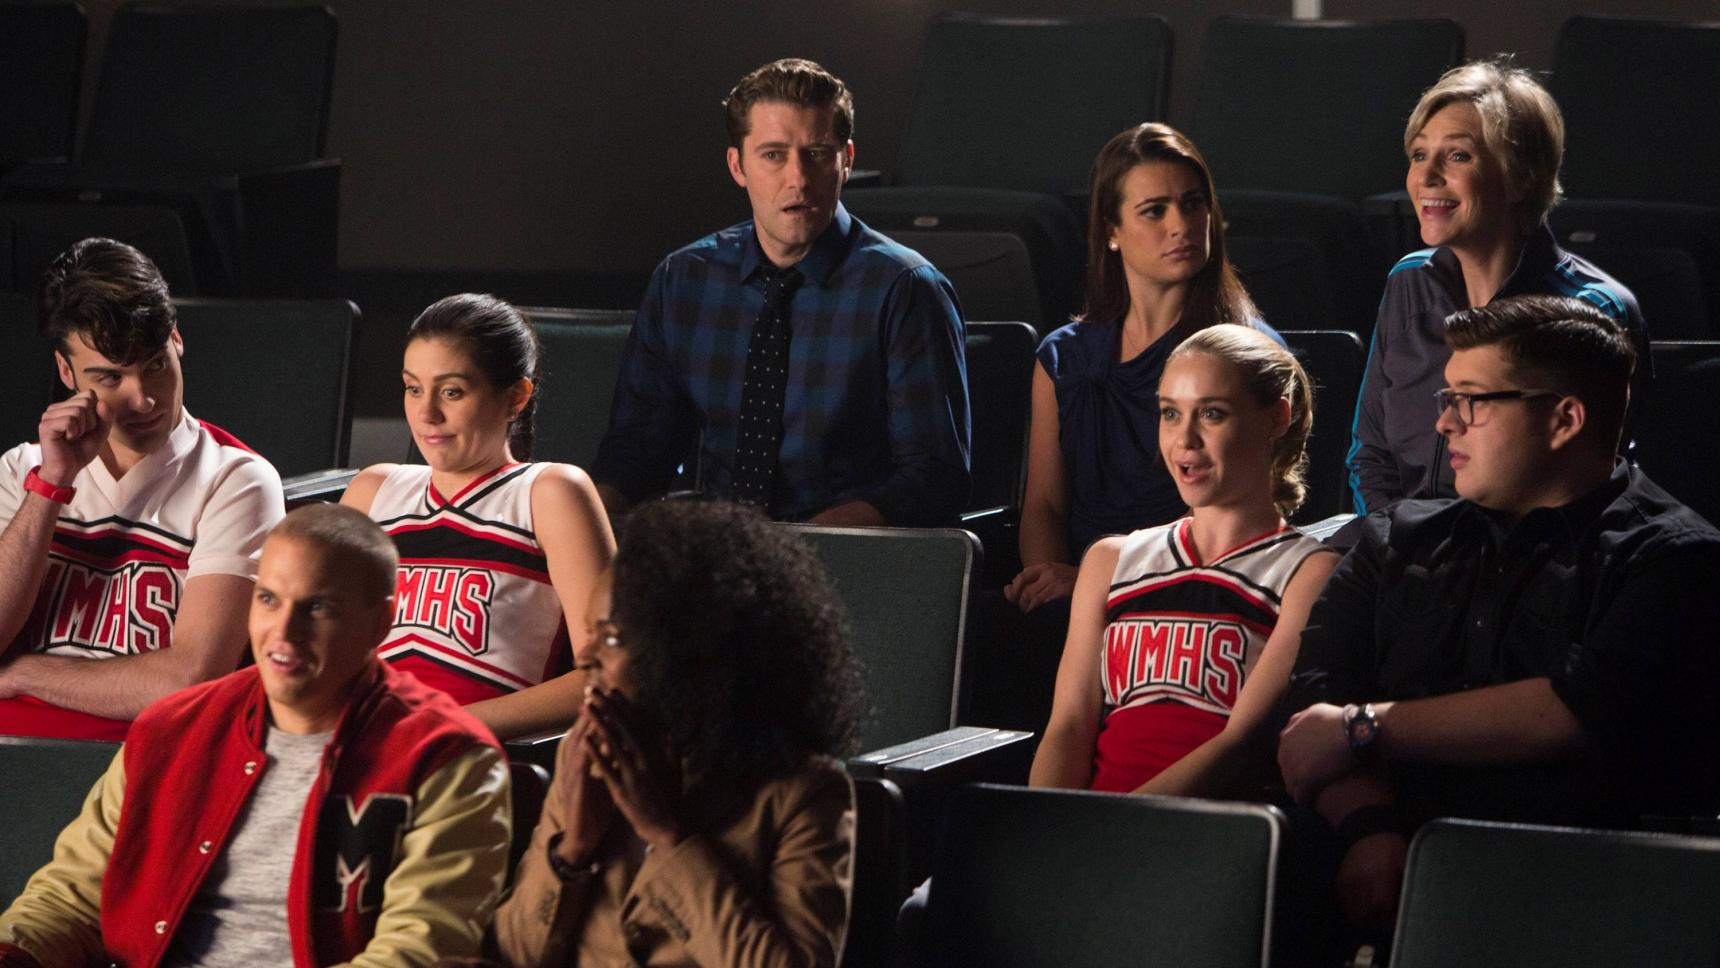 Poster del episodio 9 de Glee online